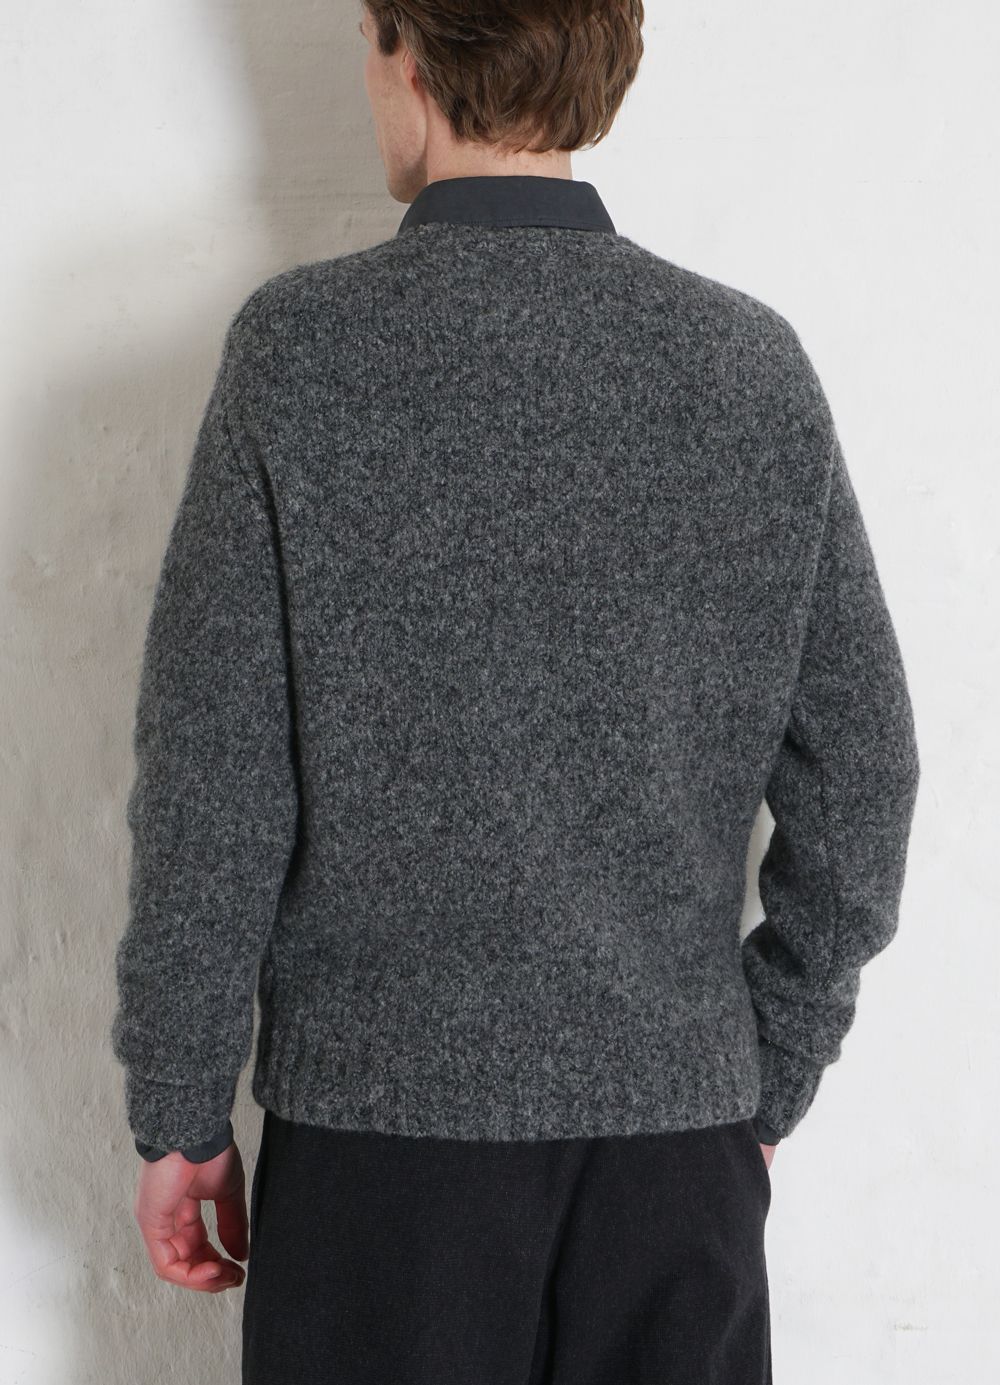 HANSEN GARMENTS - LEONARD | Knitted Crew Neck Sweater | Ashes - HANSEN Garments